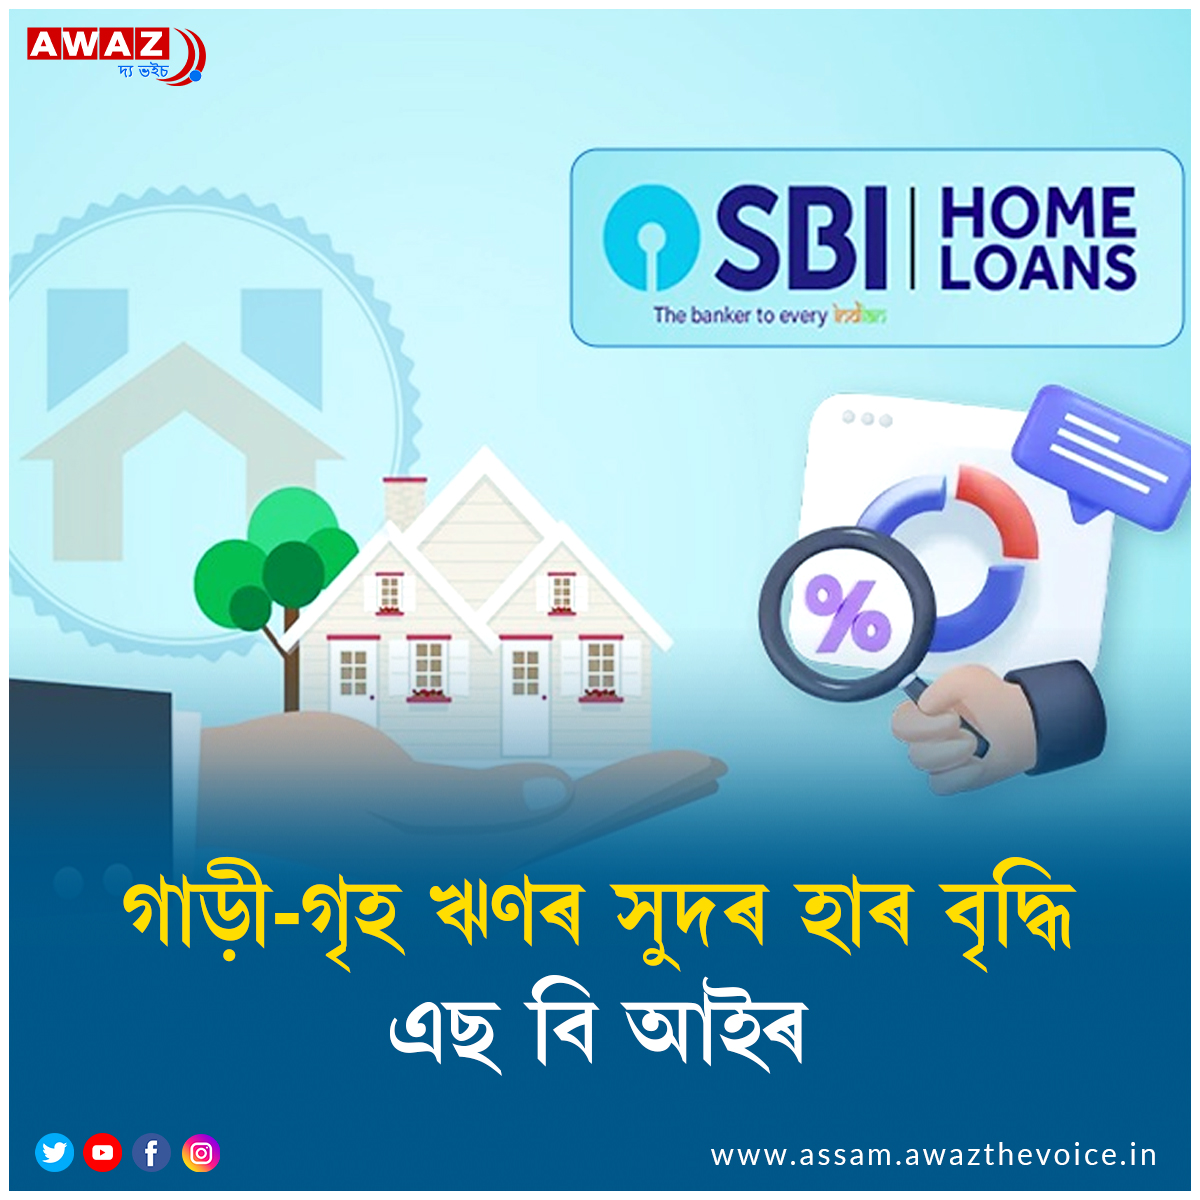 SBI hikes interests on auto loan, home loan
#SBI #Statebankofindia #homeloans #autoloan #interestrates #reservebankofindia #bankingwithconscience @TheOfficialSBI @sbioa_ne @HomeLoansByHDFC @HDFC_Bank @ICICIBank @AxisBank @ibhomeloans @RBI @nsitharaman @nsitharamanoffc @AssamAwaz